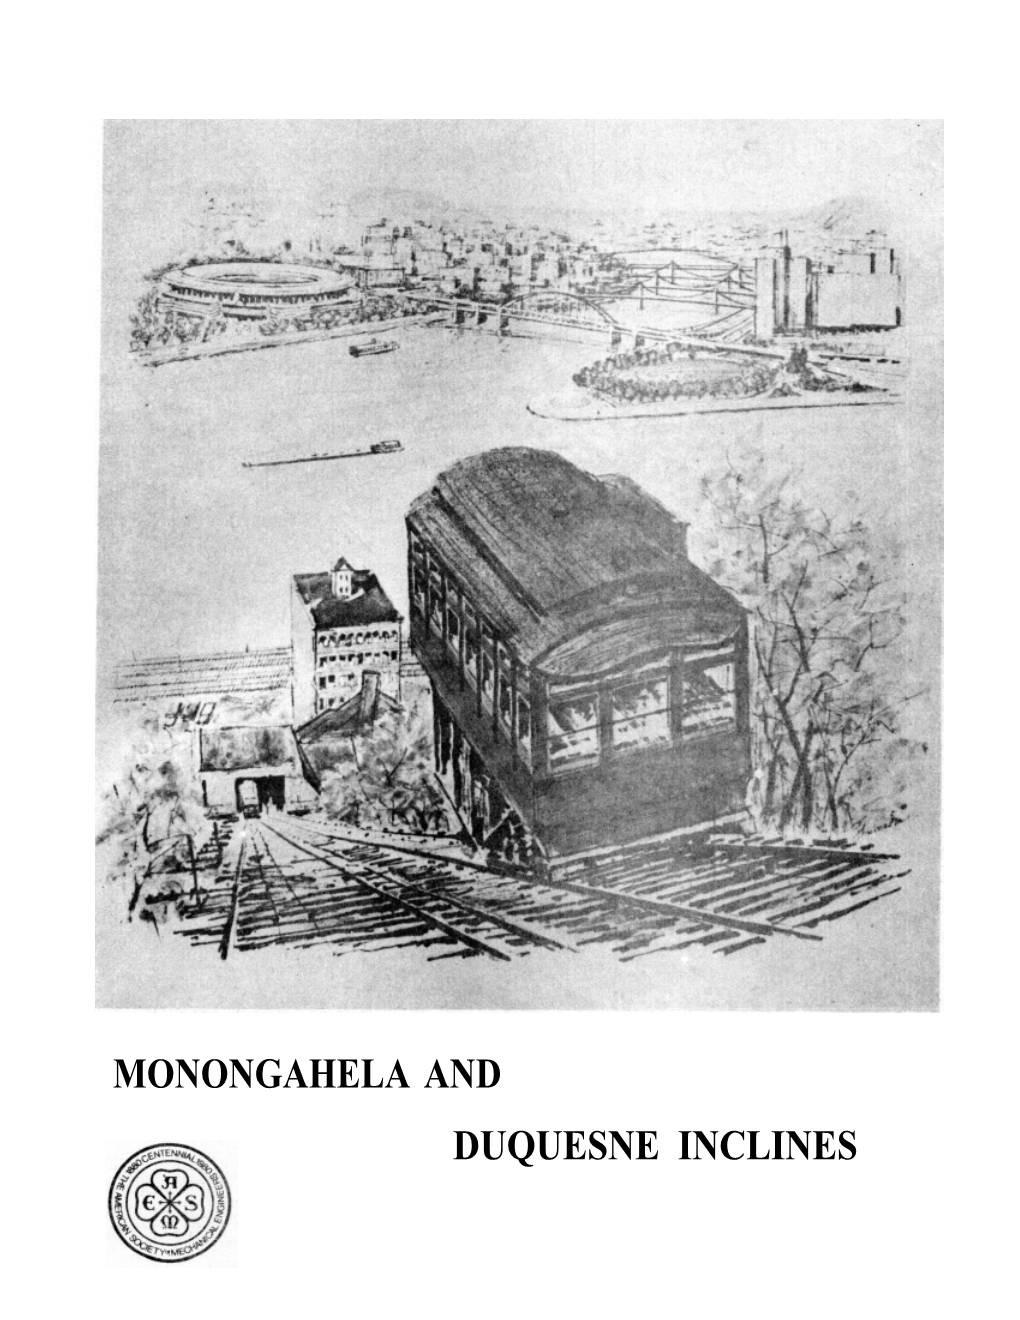 Monongahela and Duquesne Inclines National Historic Mechanical Engineering Landmarks